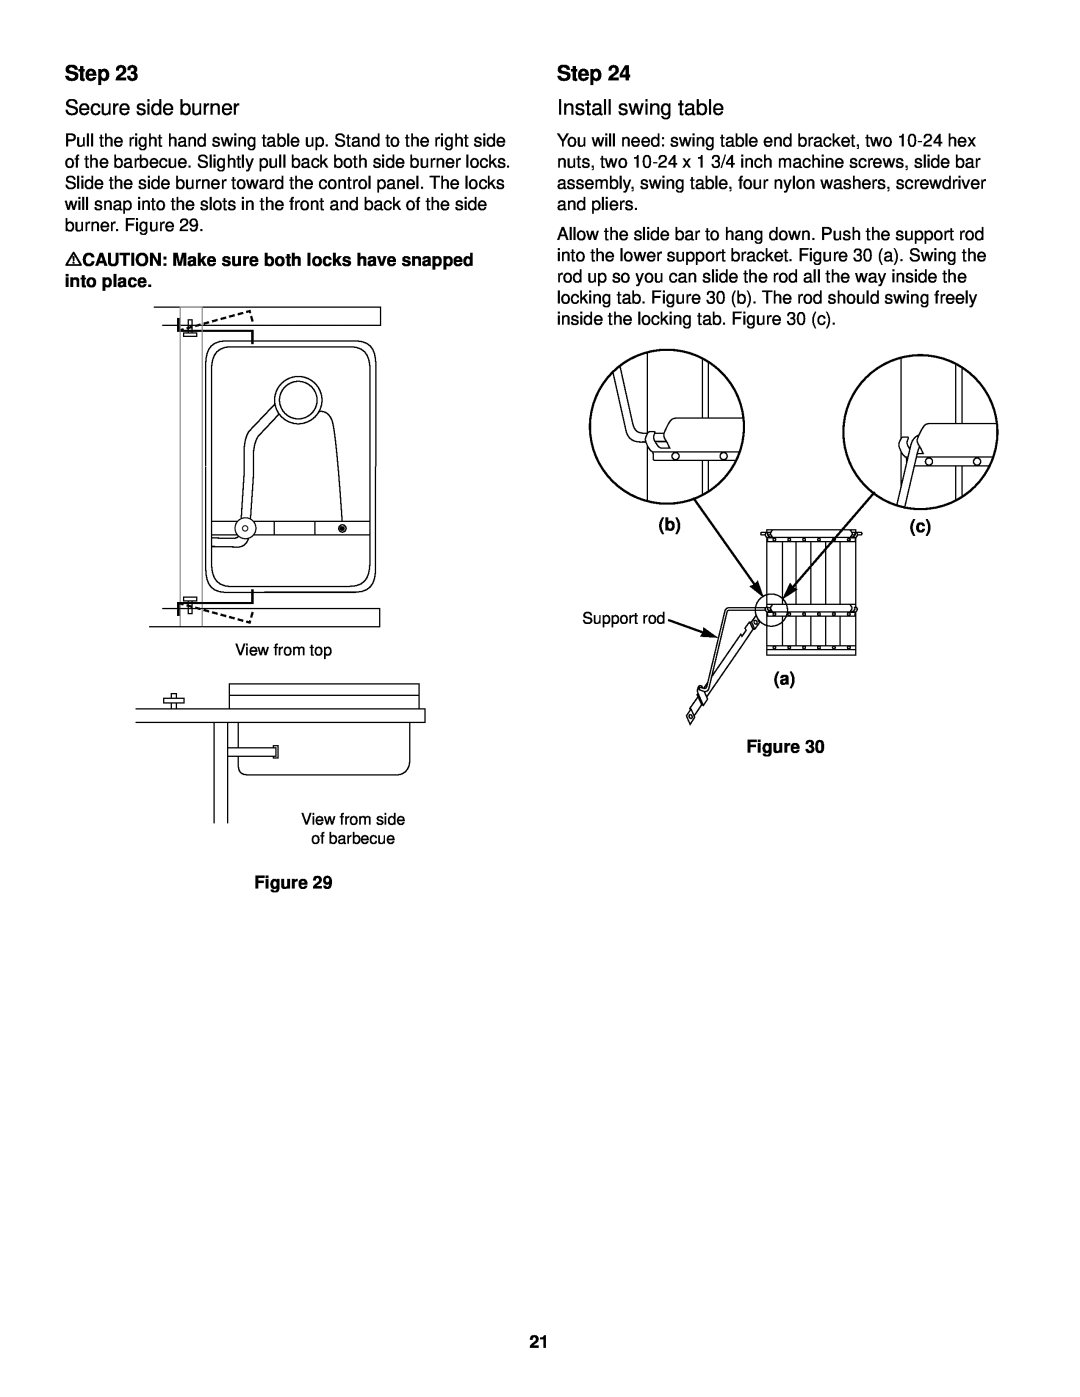 Weber 98642 owner manual Step, Secure side burner, Install swing table, a Figure 